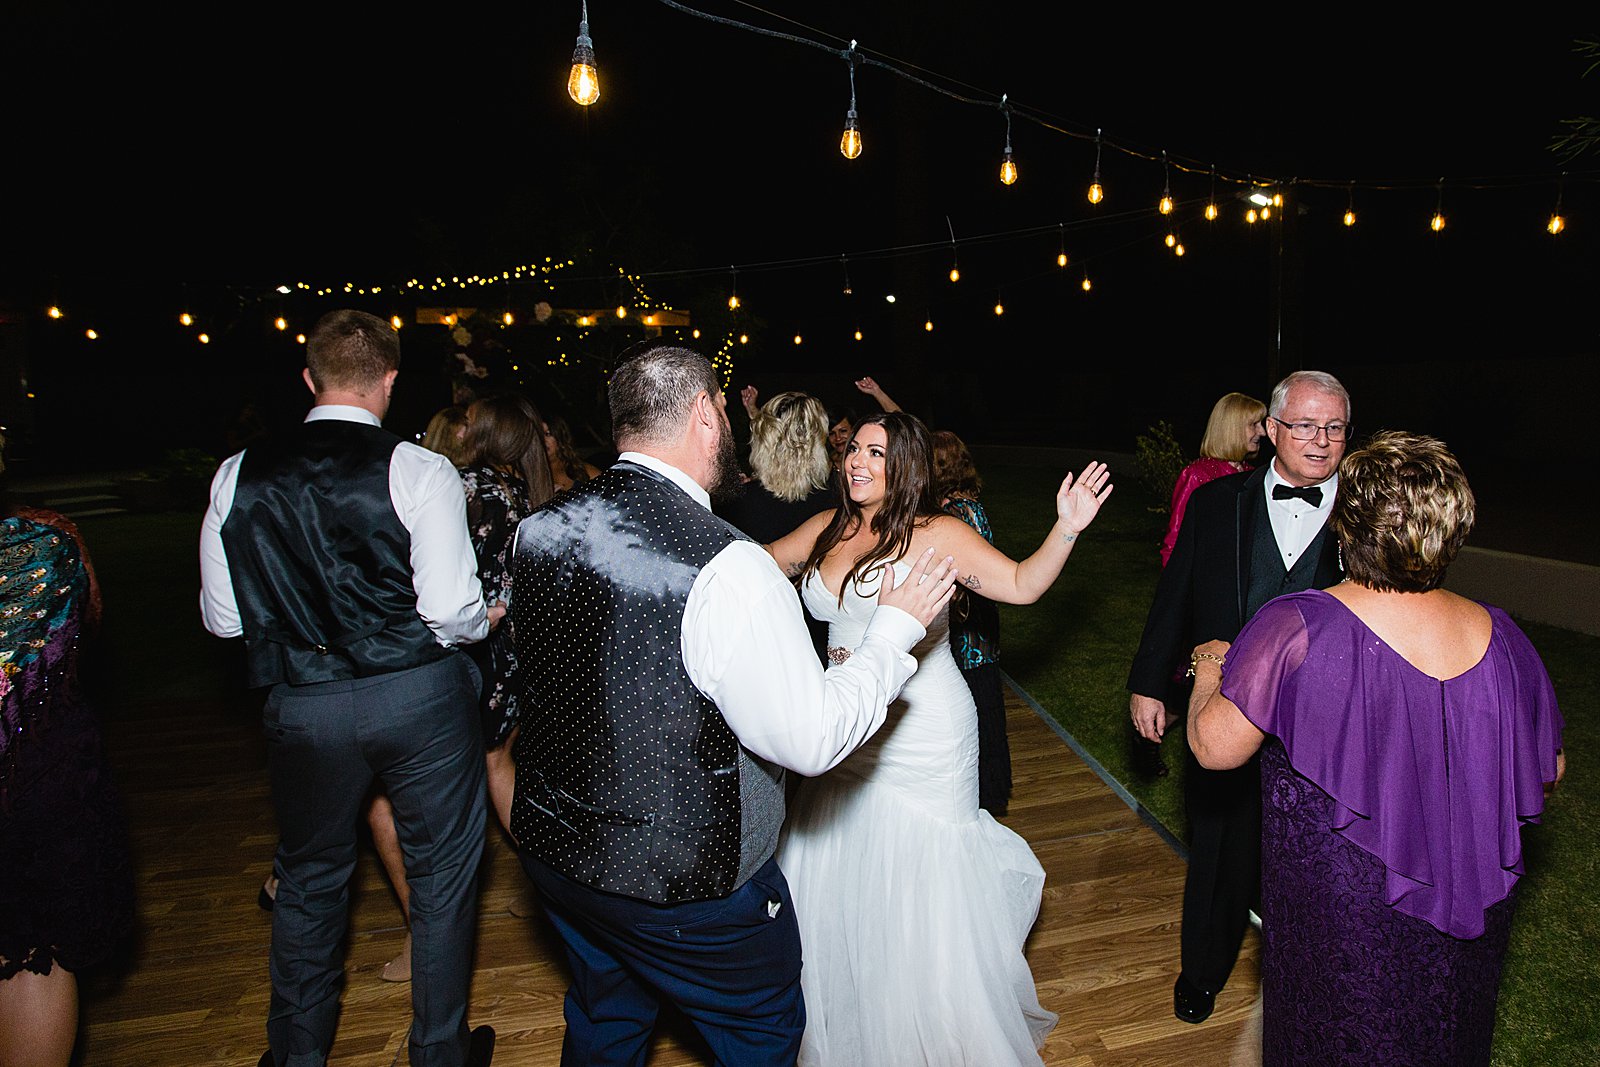 Bride and Groom dancing with guests at their arizona backyard wedding wedding reception by Arizona wedding photographer PMA Photography